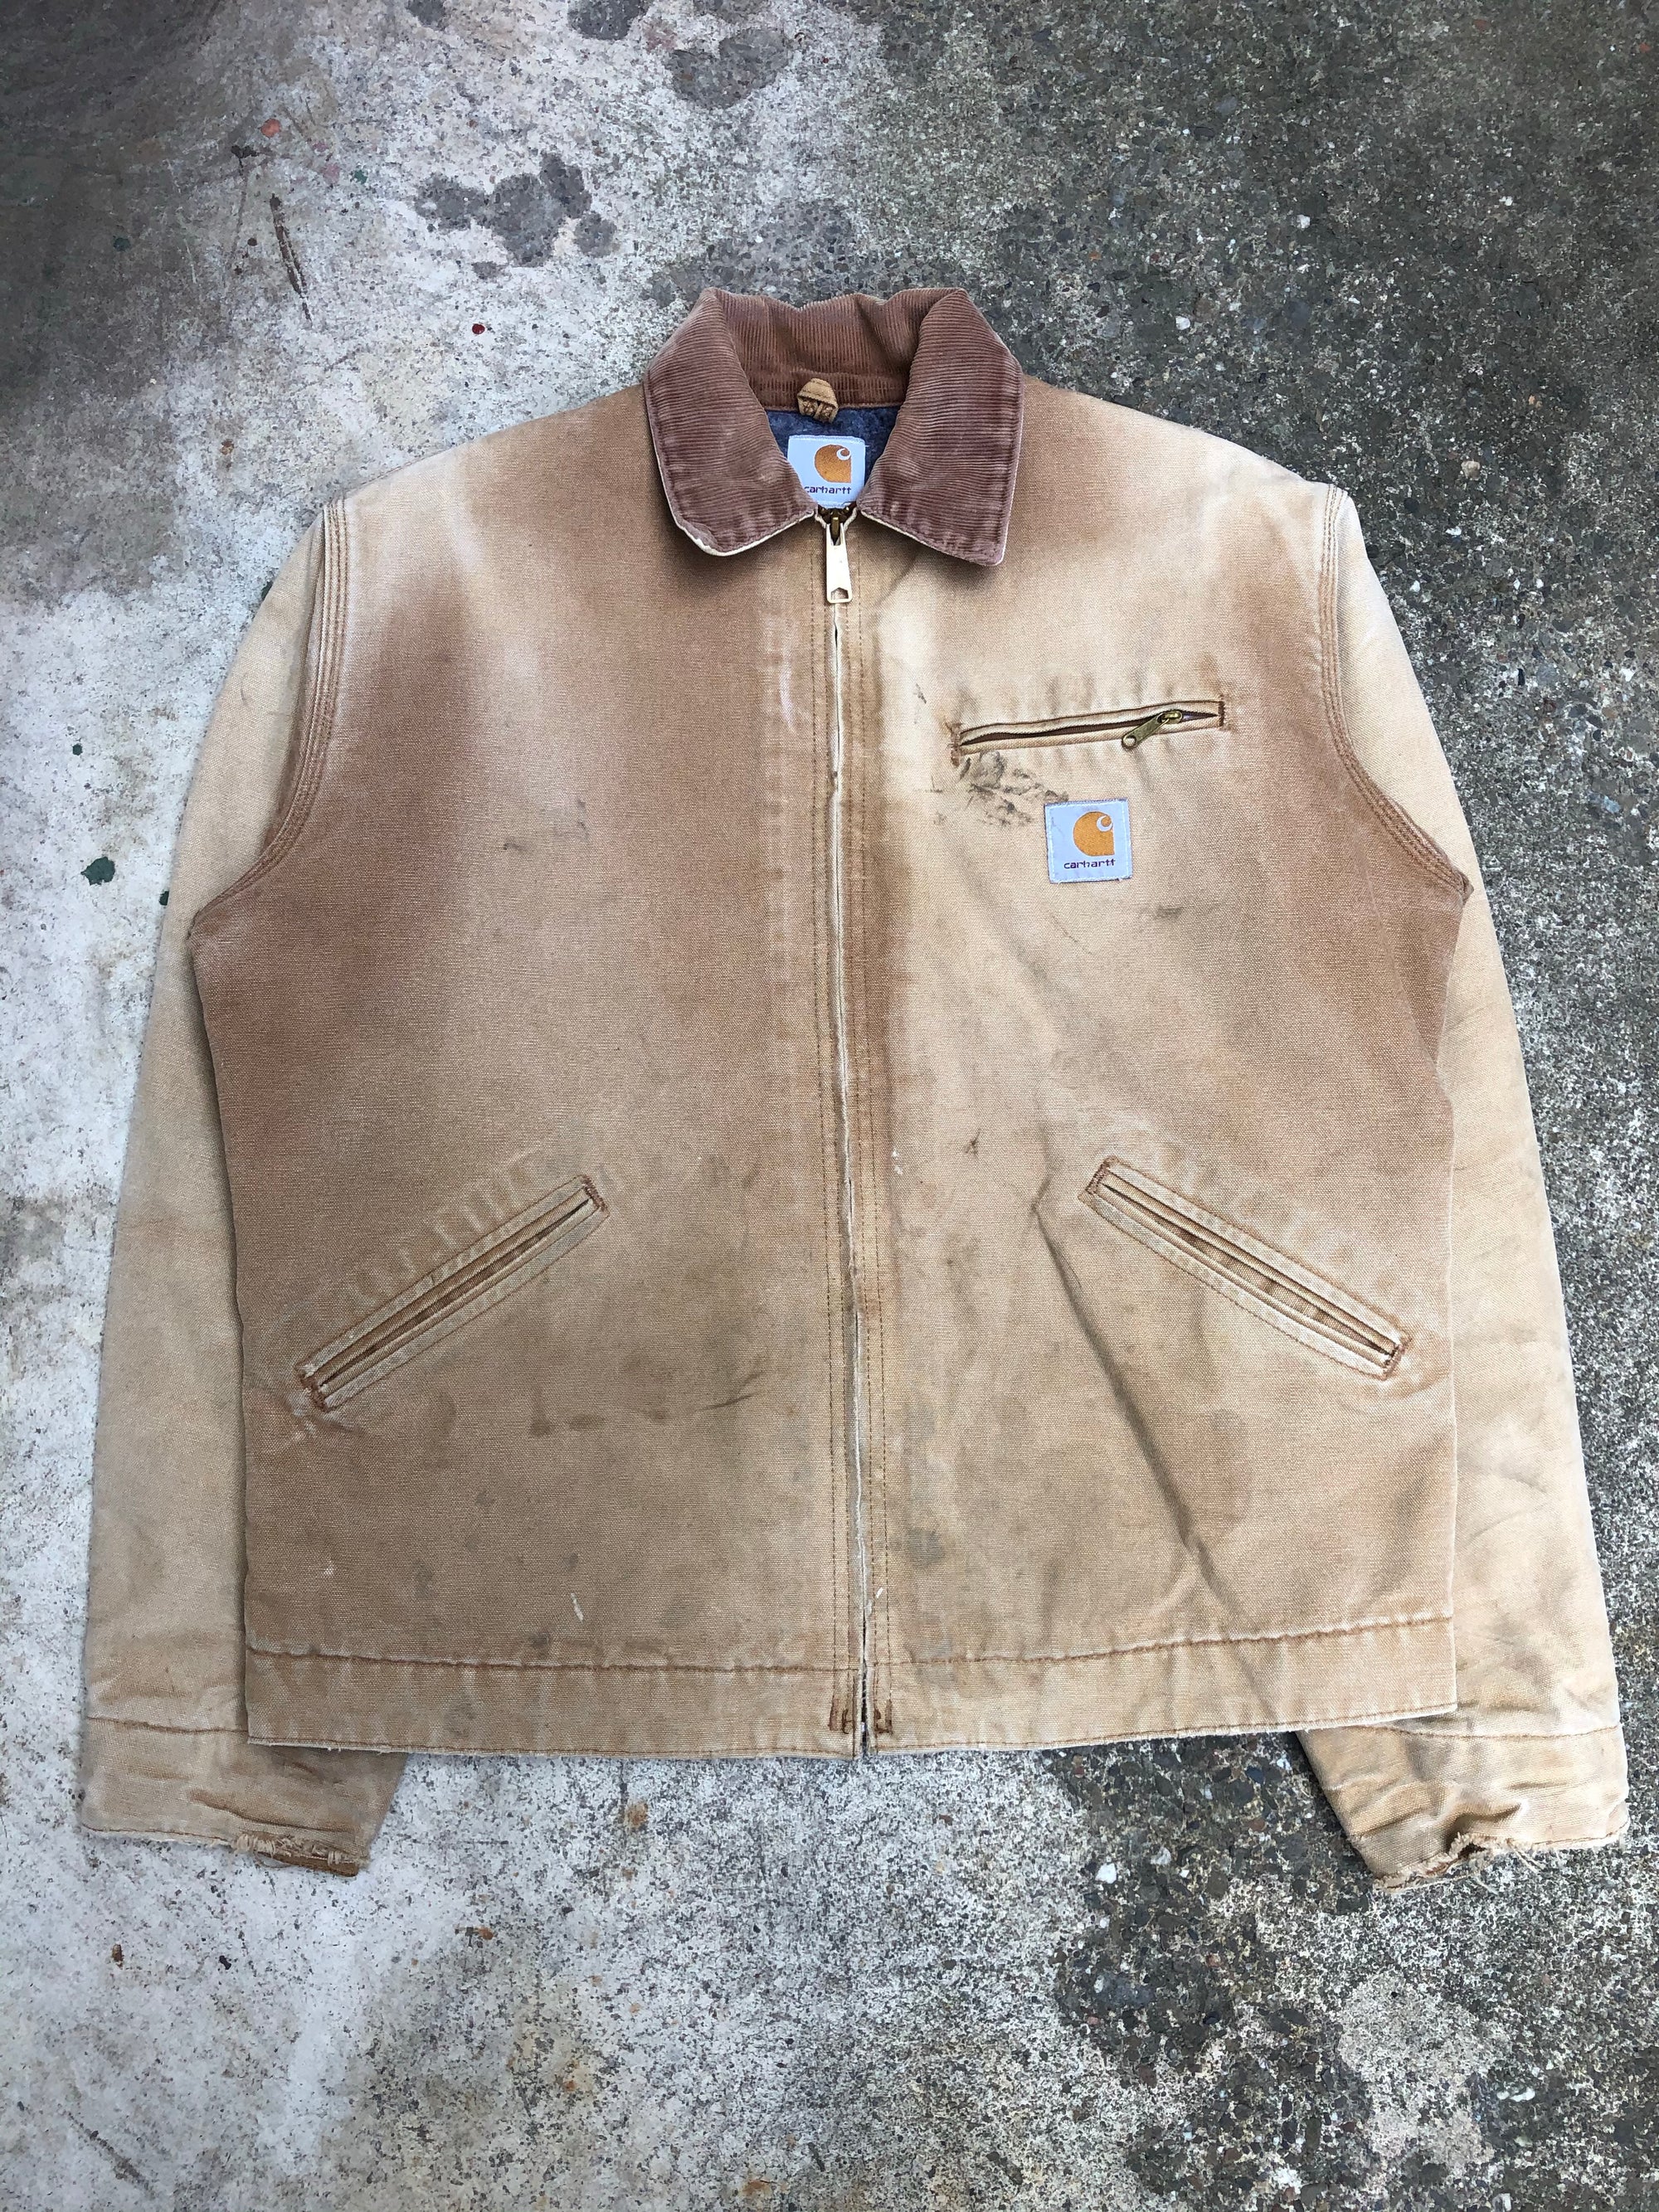 1990s Carhartt Sun Faded Tan Lined Work Jacket